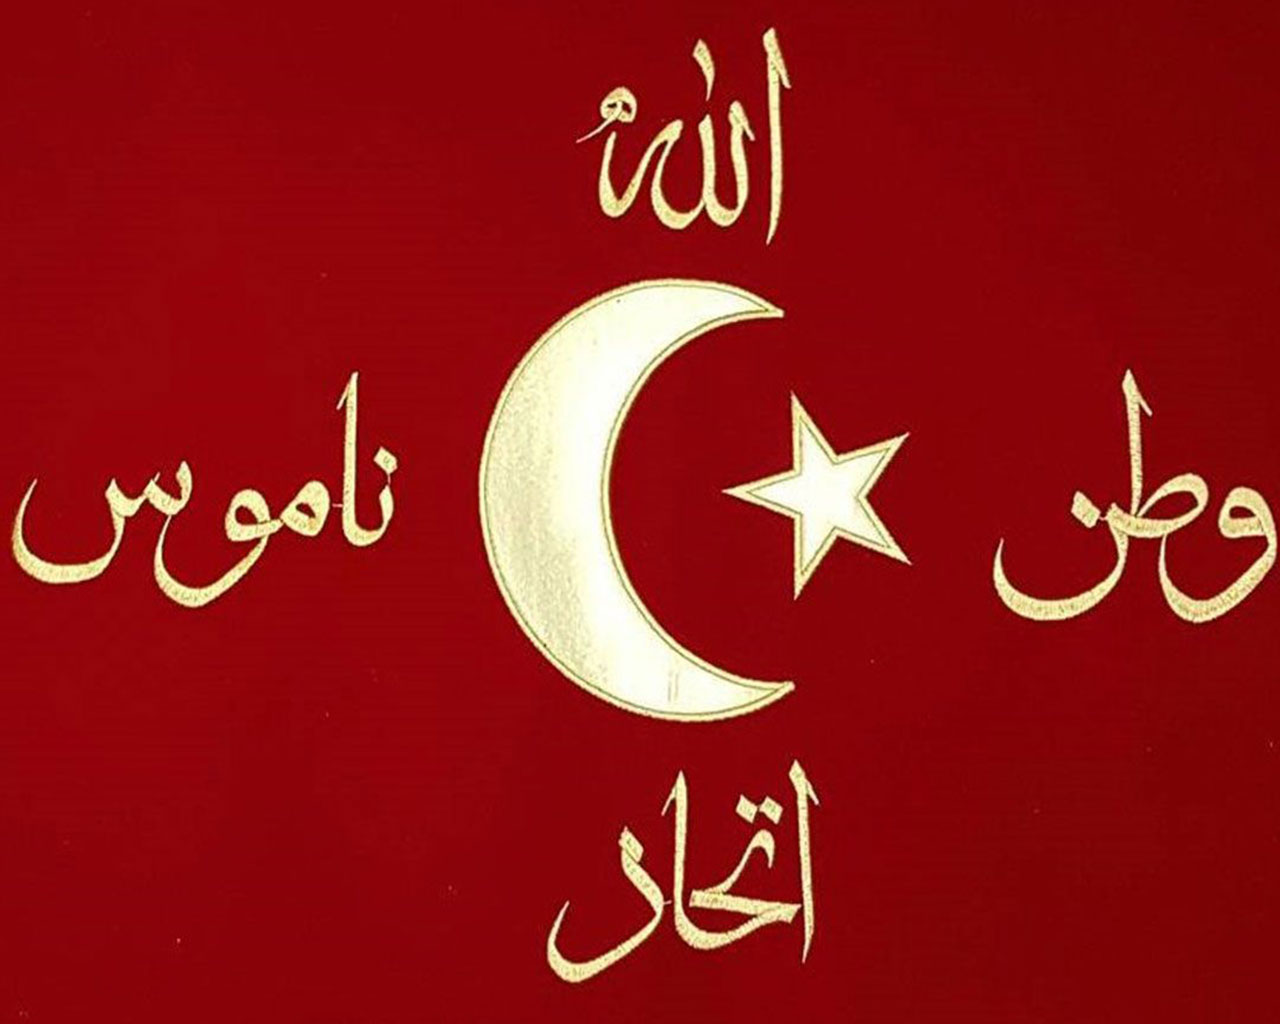 kurani kerim yazili turk bayragi resimleri 9